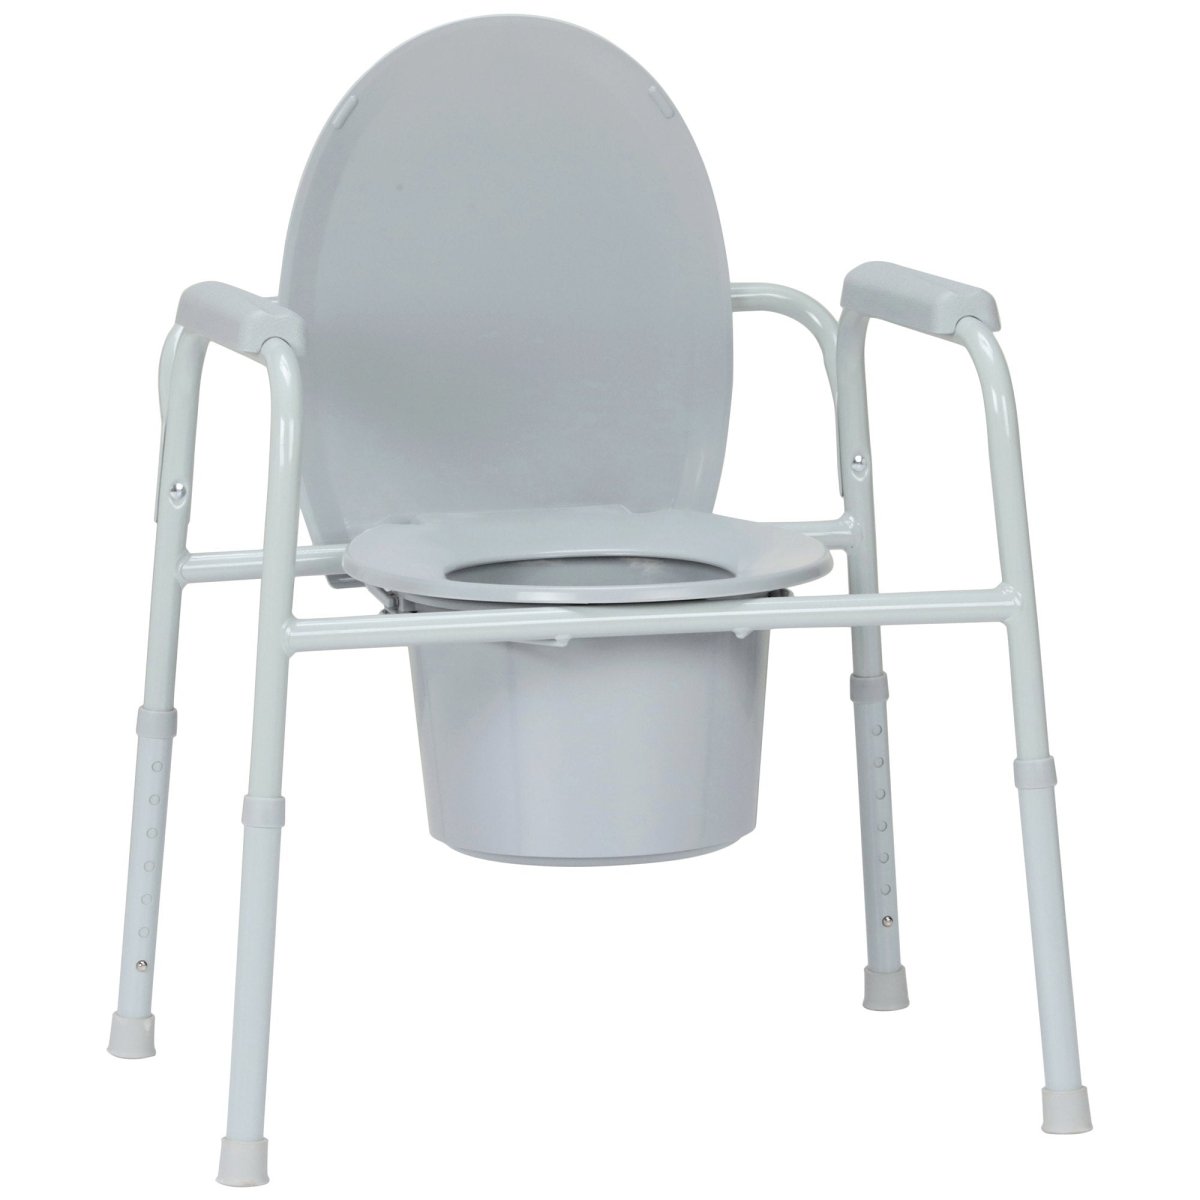 McKesson Nonfolding Commode Chair - 1073634_CS - 2